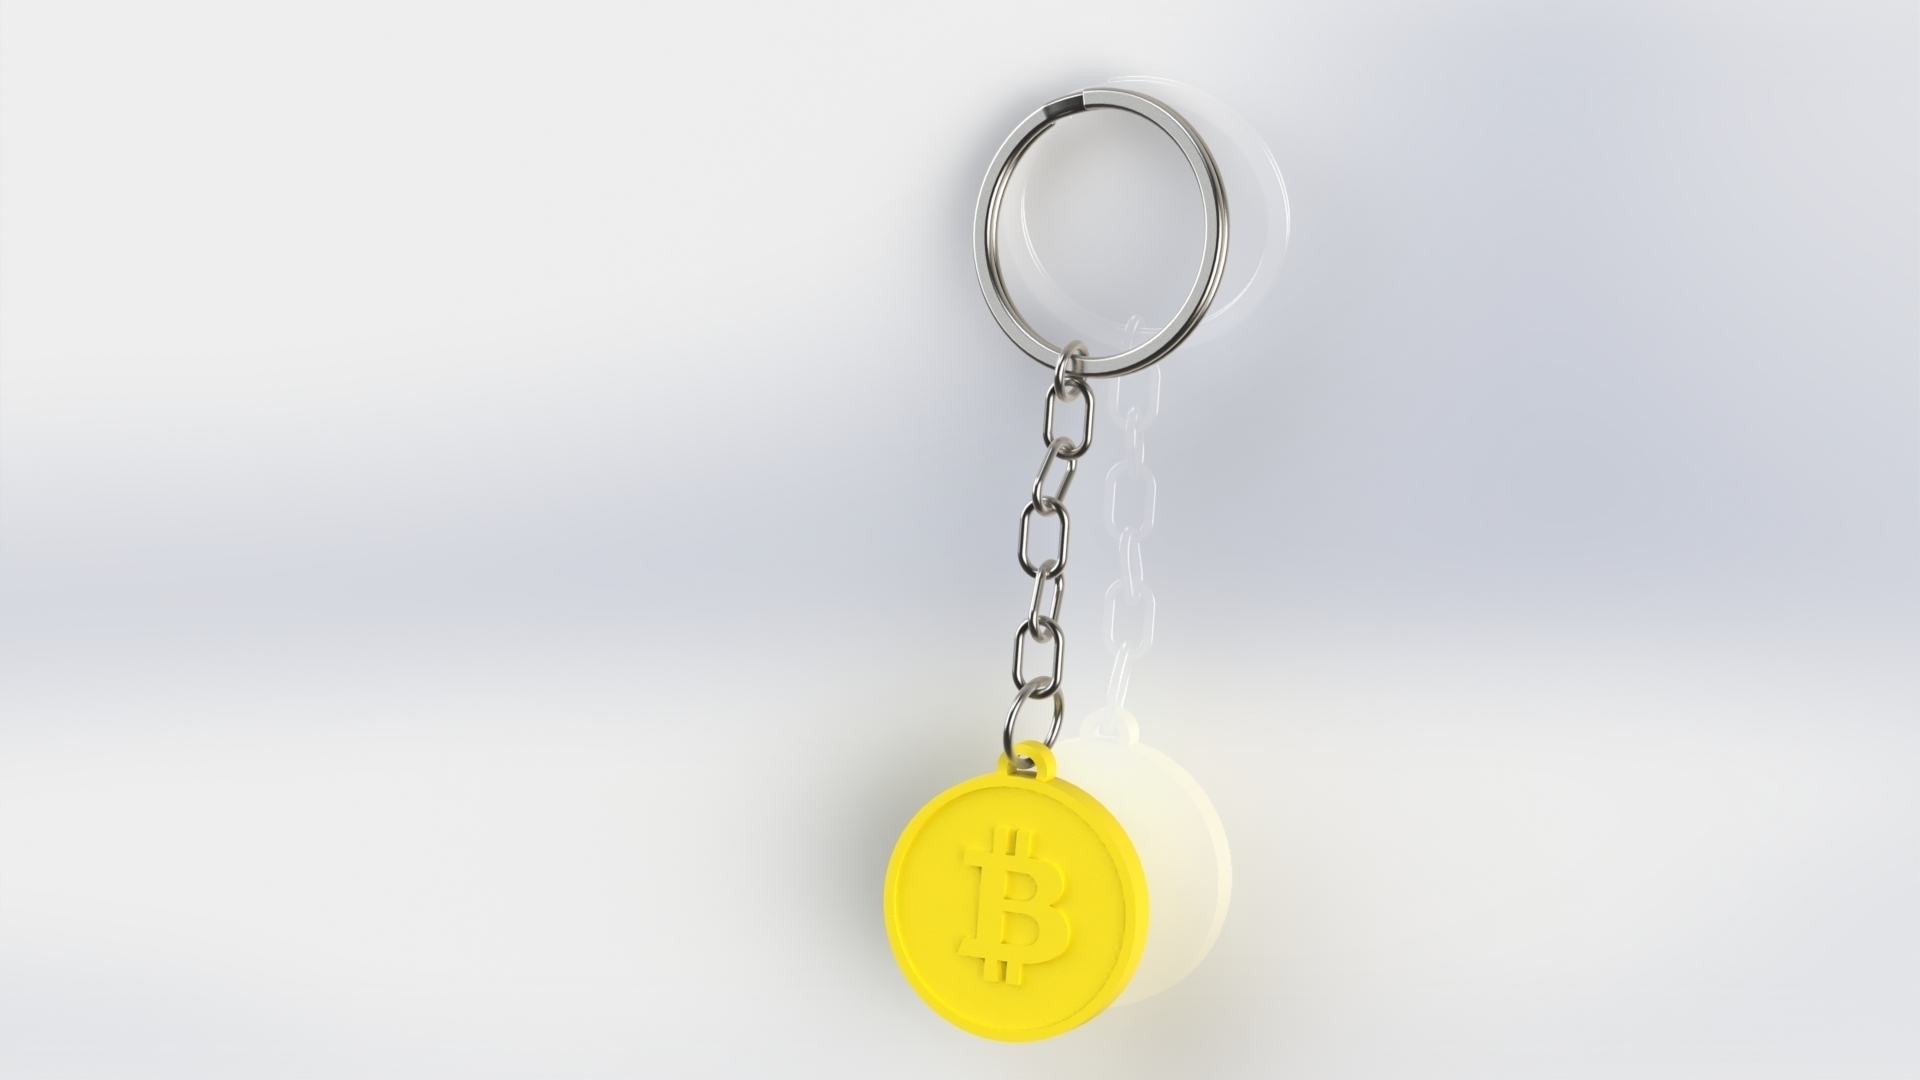 3D printed Bitcoin keychain 